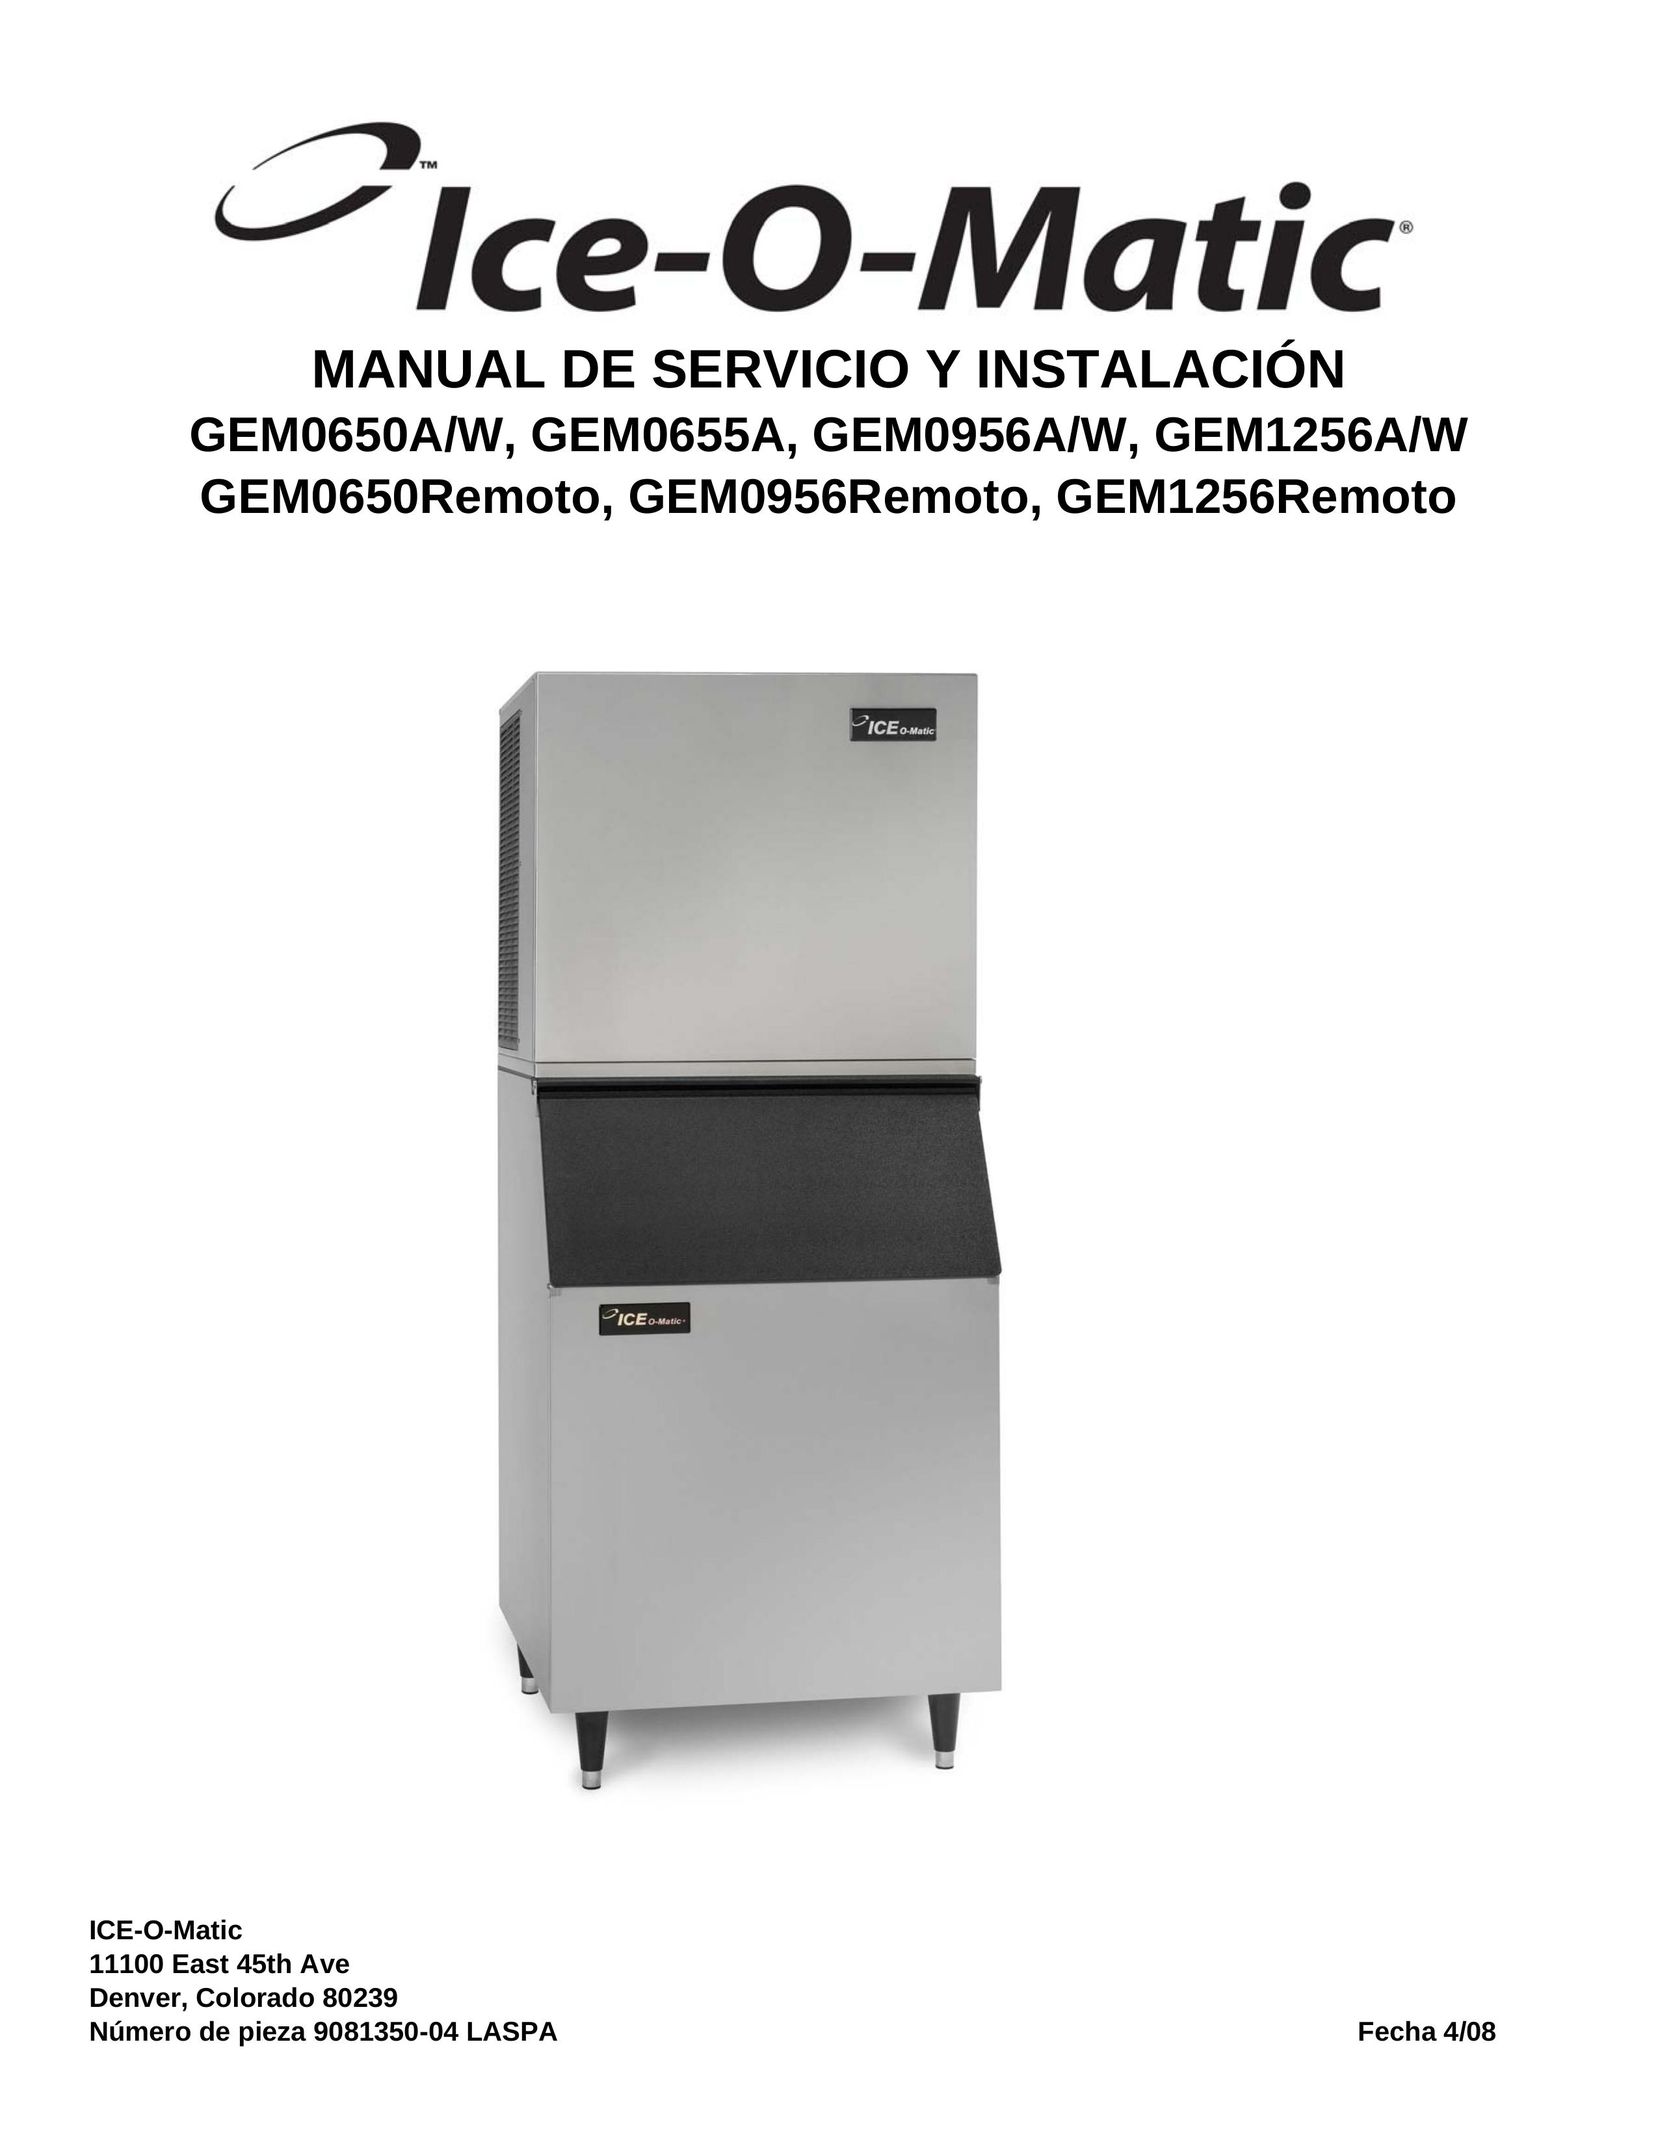 Ice-O-Matic GEM0956Remoto Ice Maker User Manual